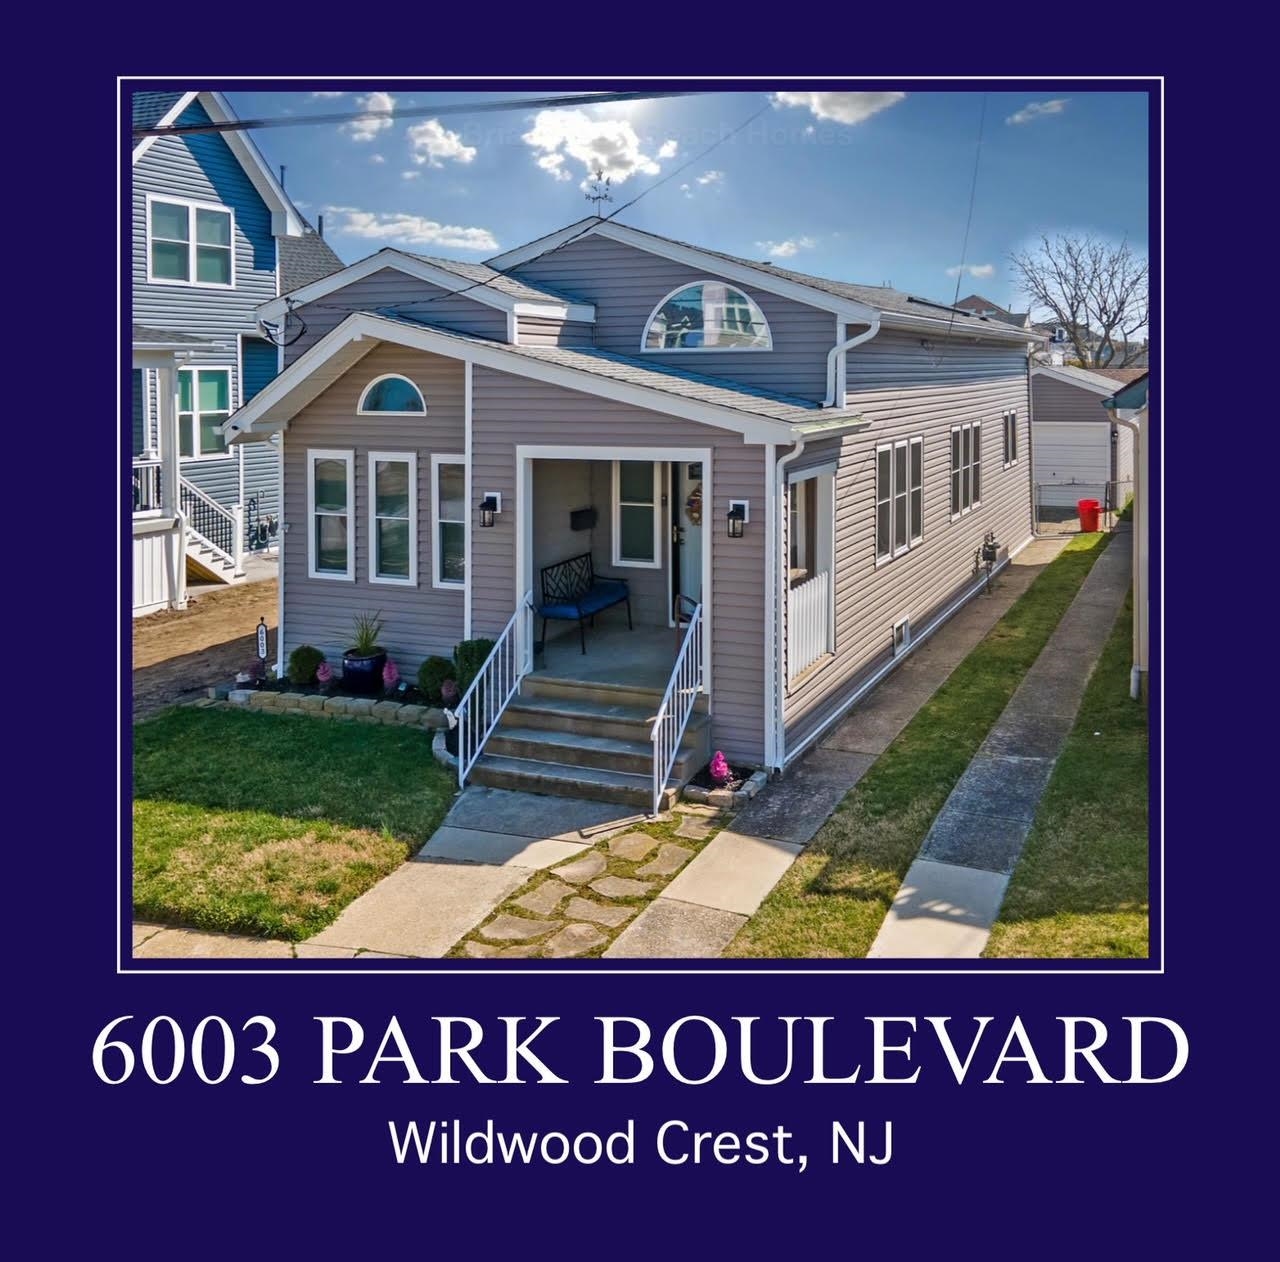 6003 Park Boulevard - Wildwood Crest